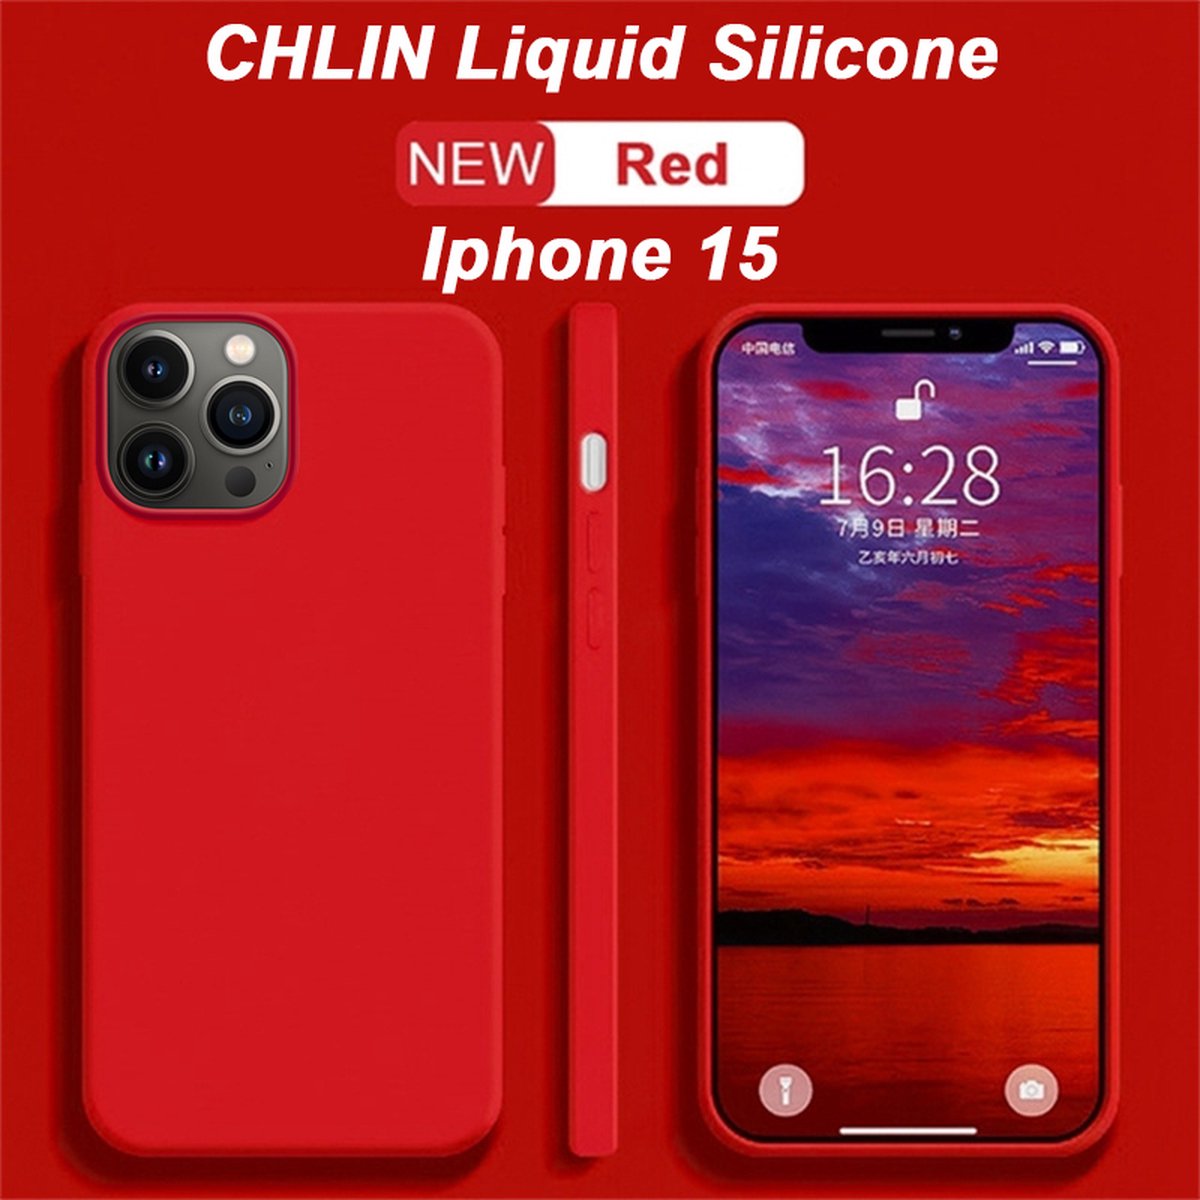 CL CHLIN® Premium Siliconen Case Iphone 15 Rood - Iphone 15 hoesje - Iphone 15 case - Iphone 15 hoes - Silicone hoesje - Iphone 15 protection - Iphone 15 protector